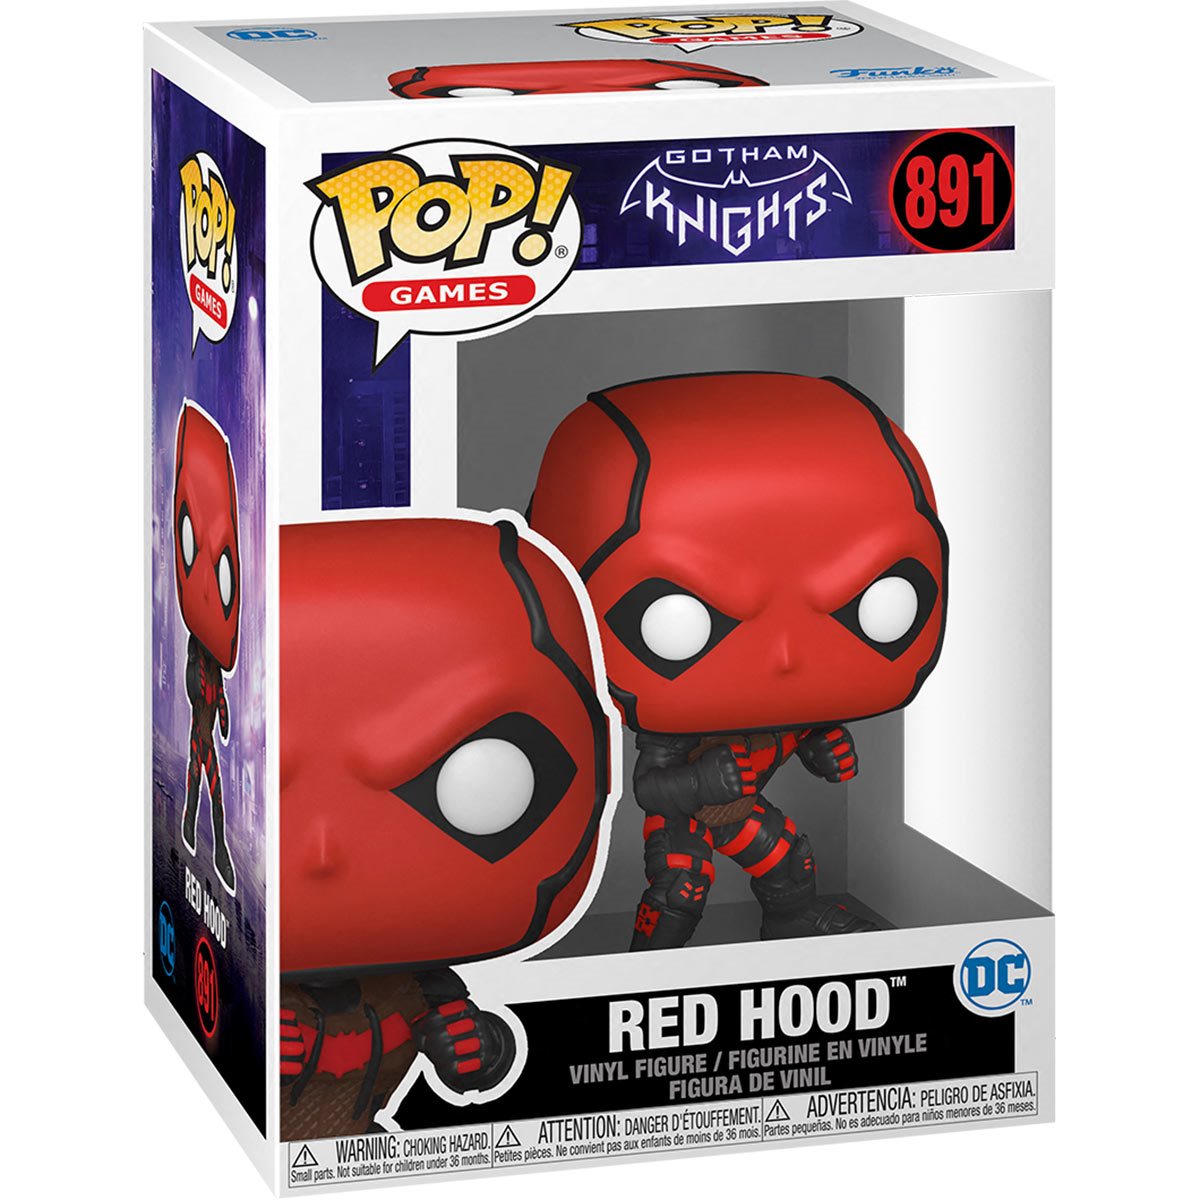 Gotham Knights Red Hood #891 Pop! Vinyl Figure